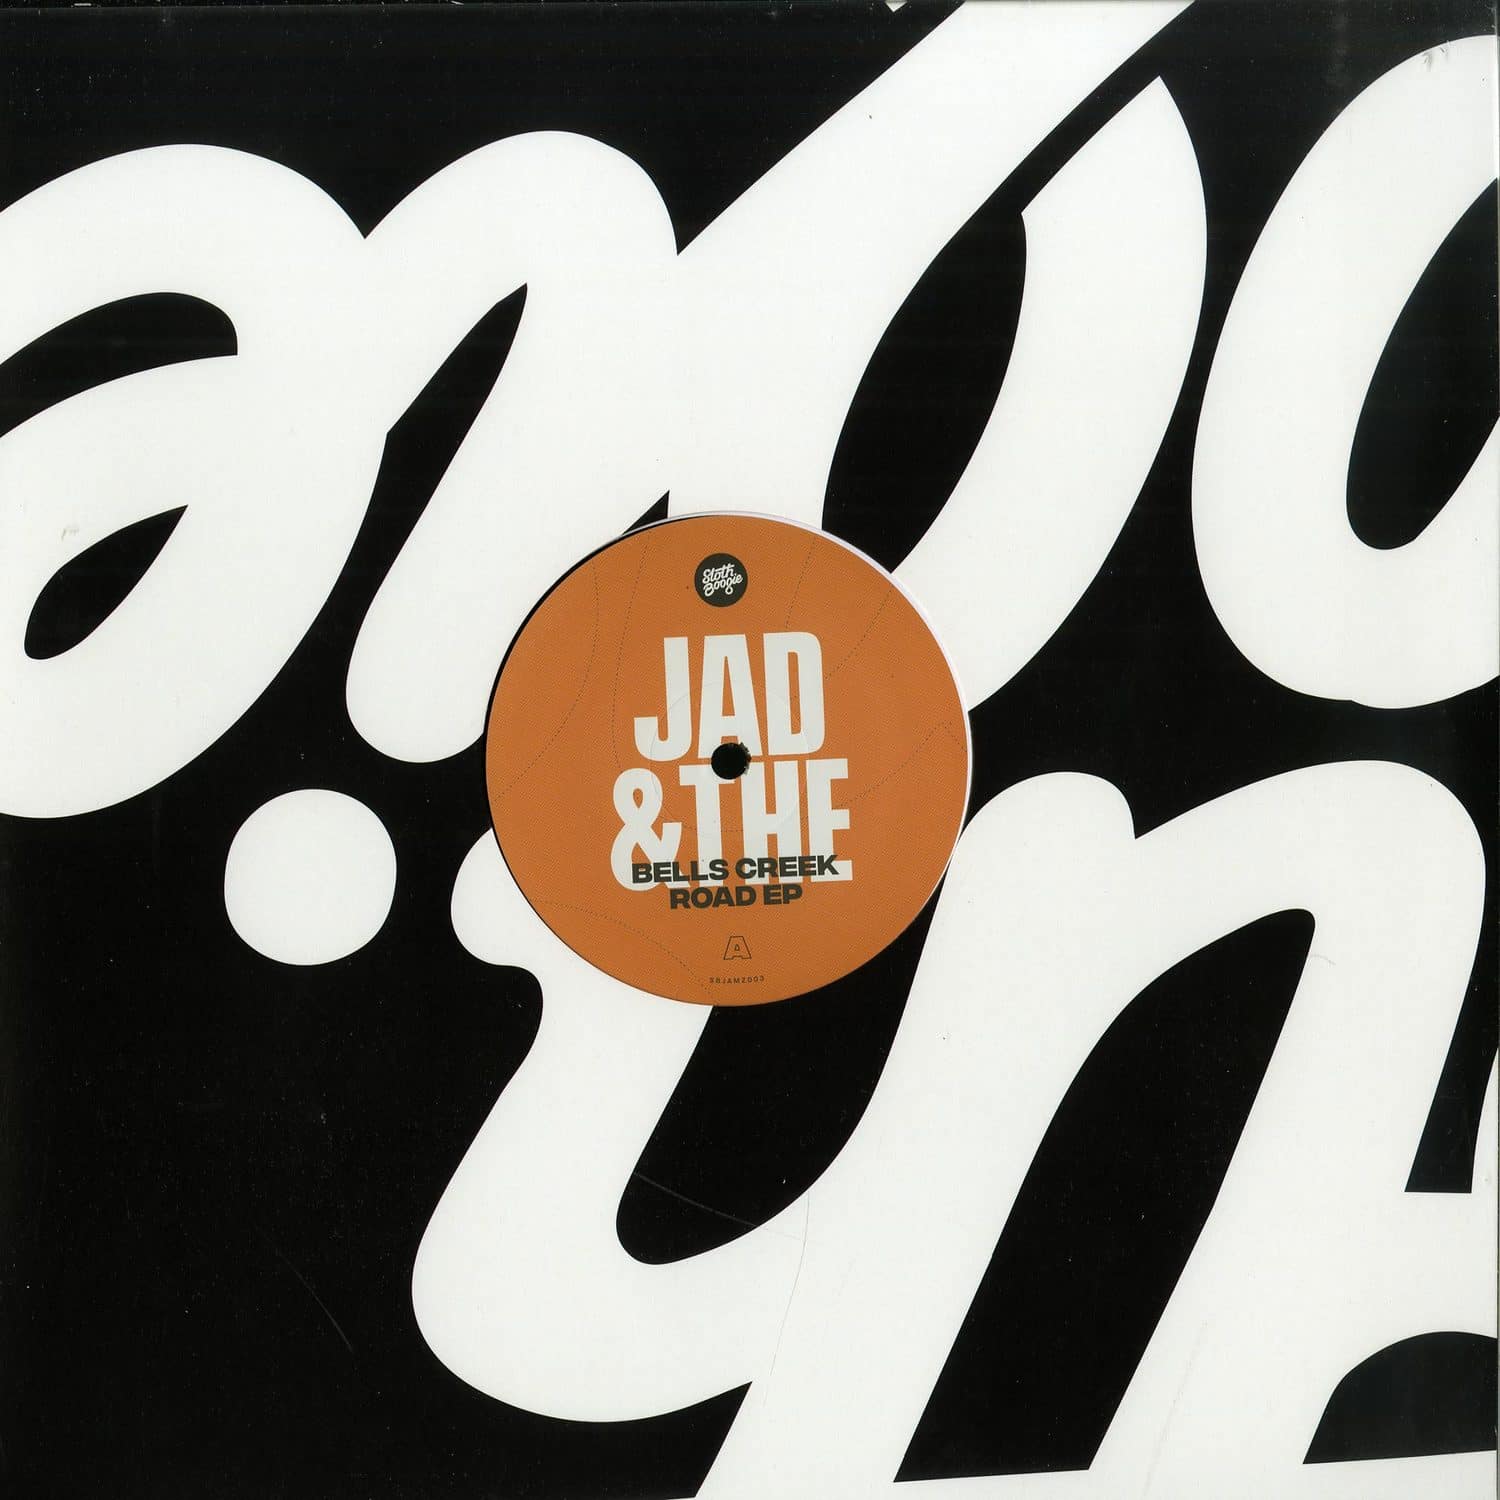 Jad & The - BELL CREEK ROAD EP